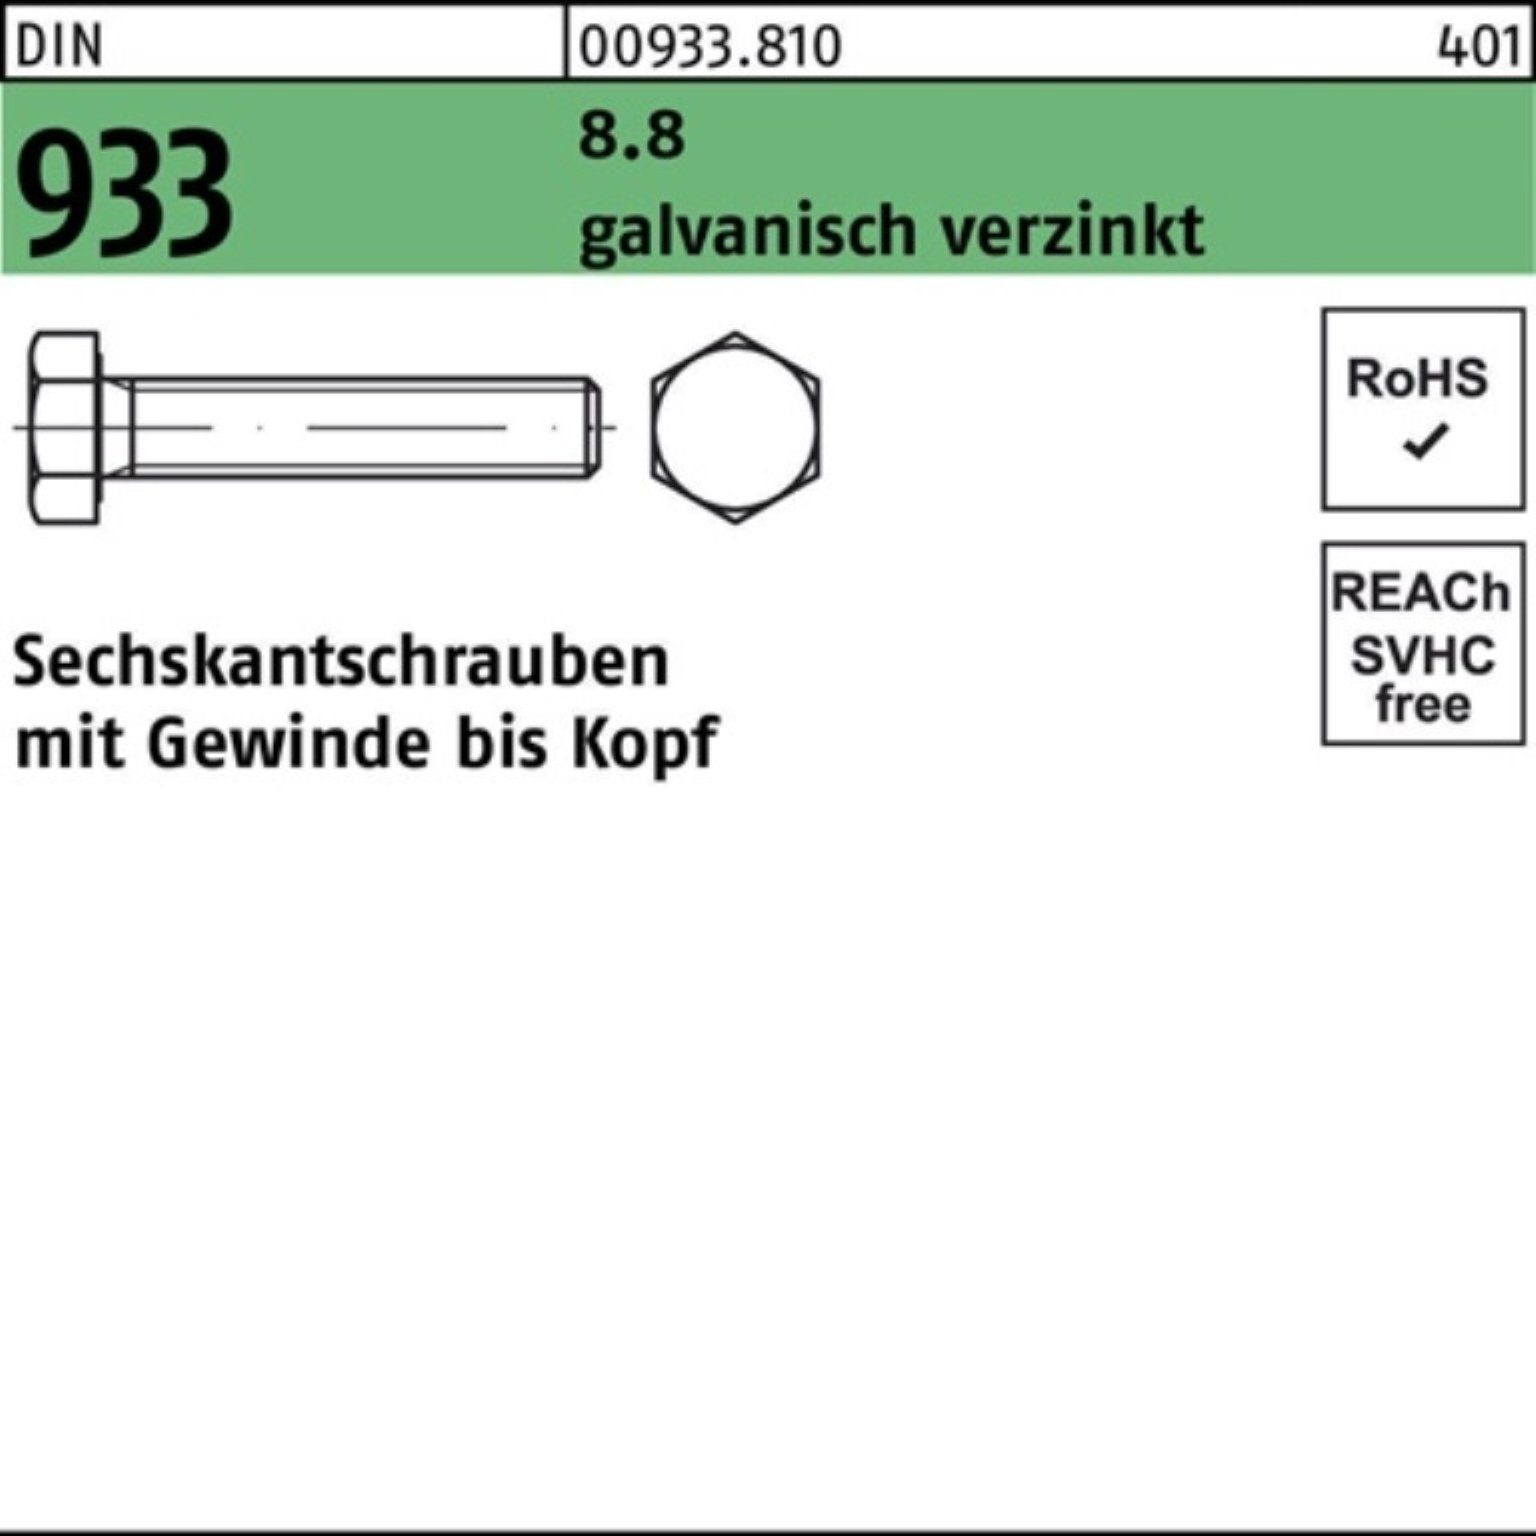 spitze Reyher Sechskantschraube 100er DIN 120 1 Stü M27x 8.8 VG galv.verz. Pack Sechskantschraube 933